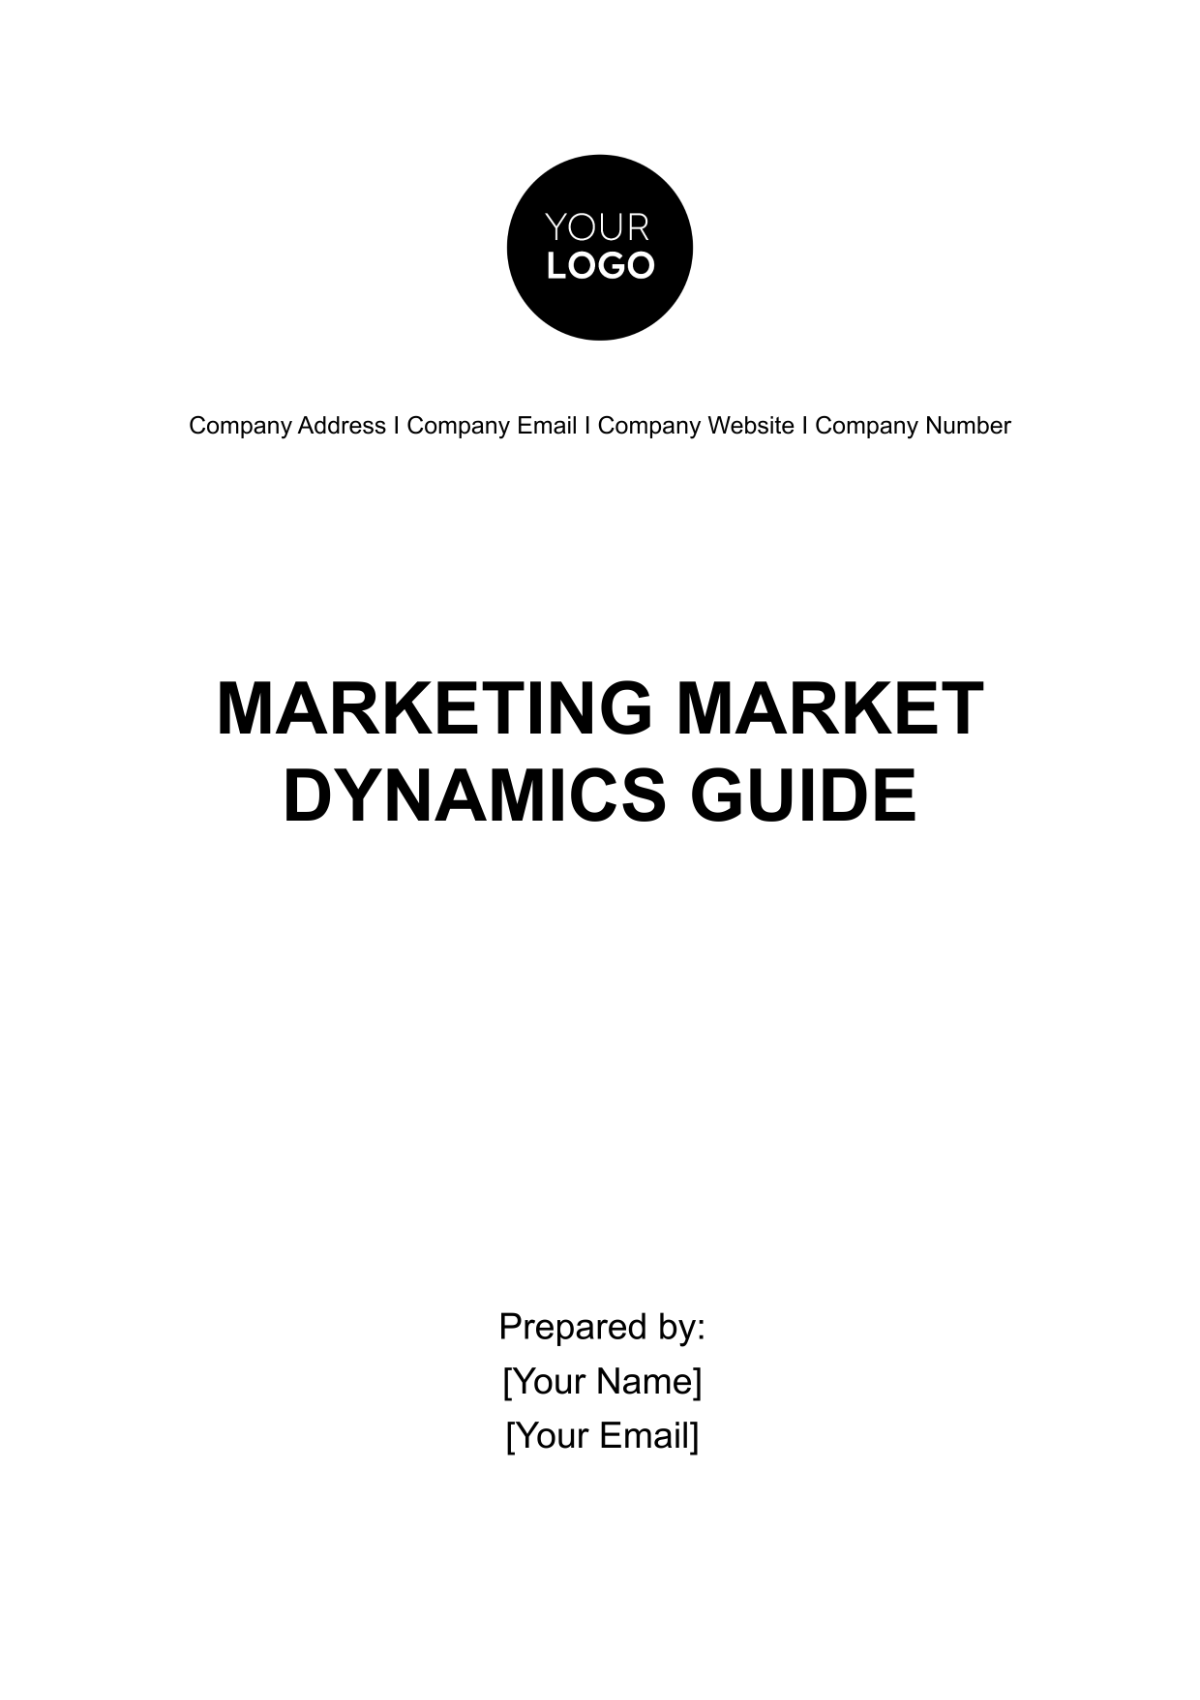 Free Marketing Market Dynamics Guide Template